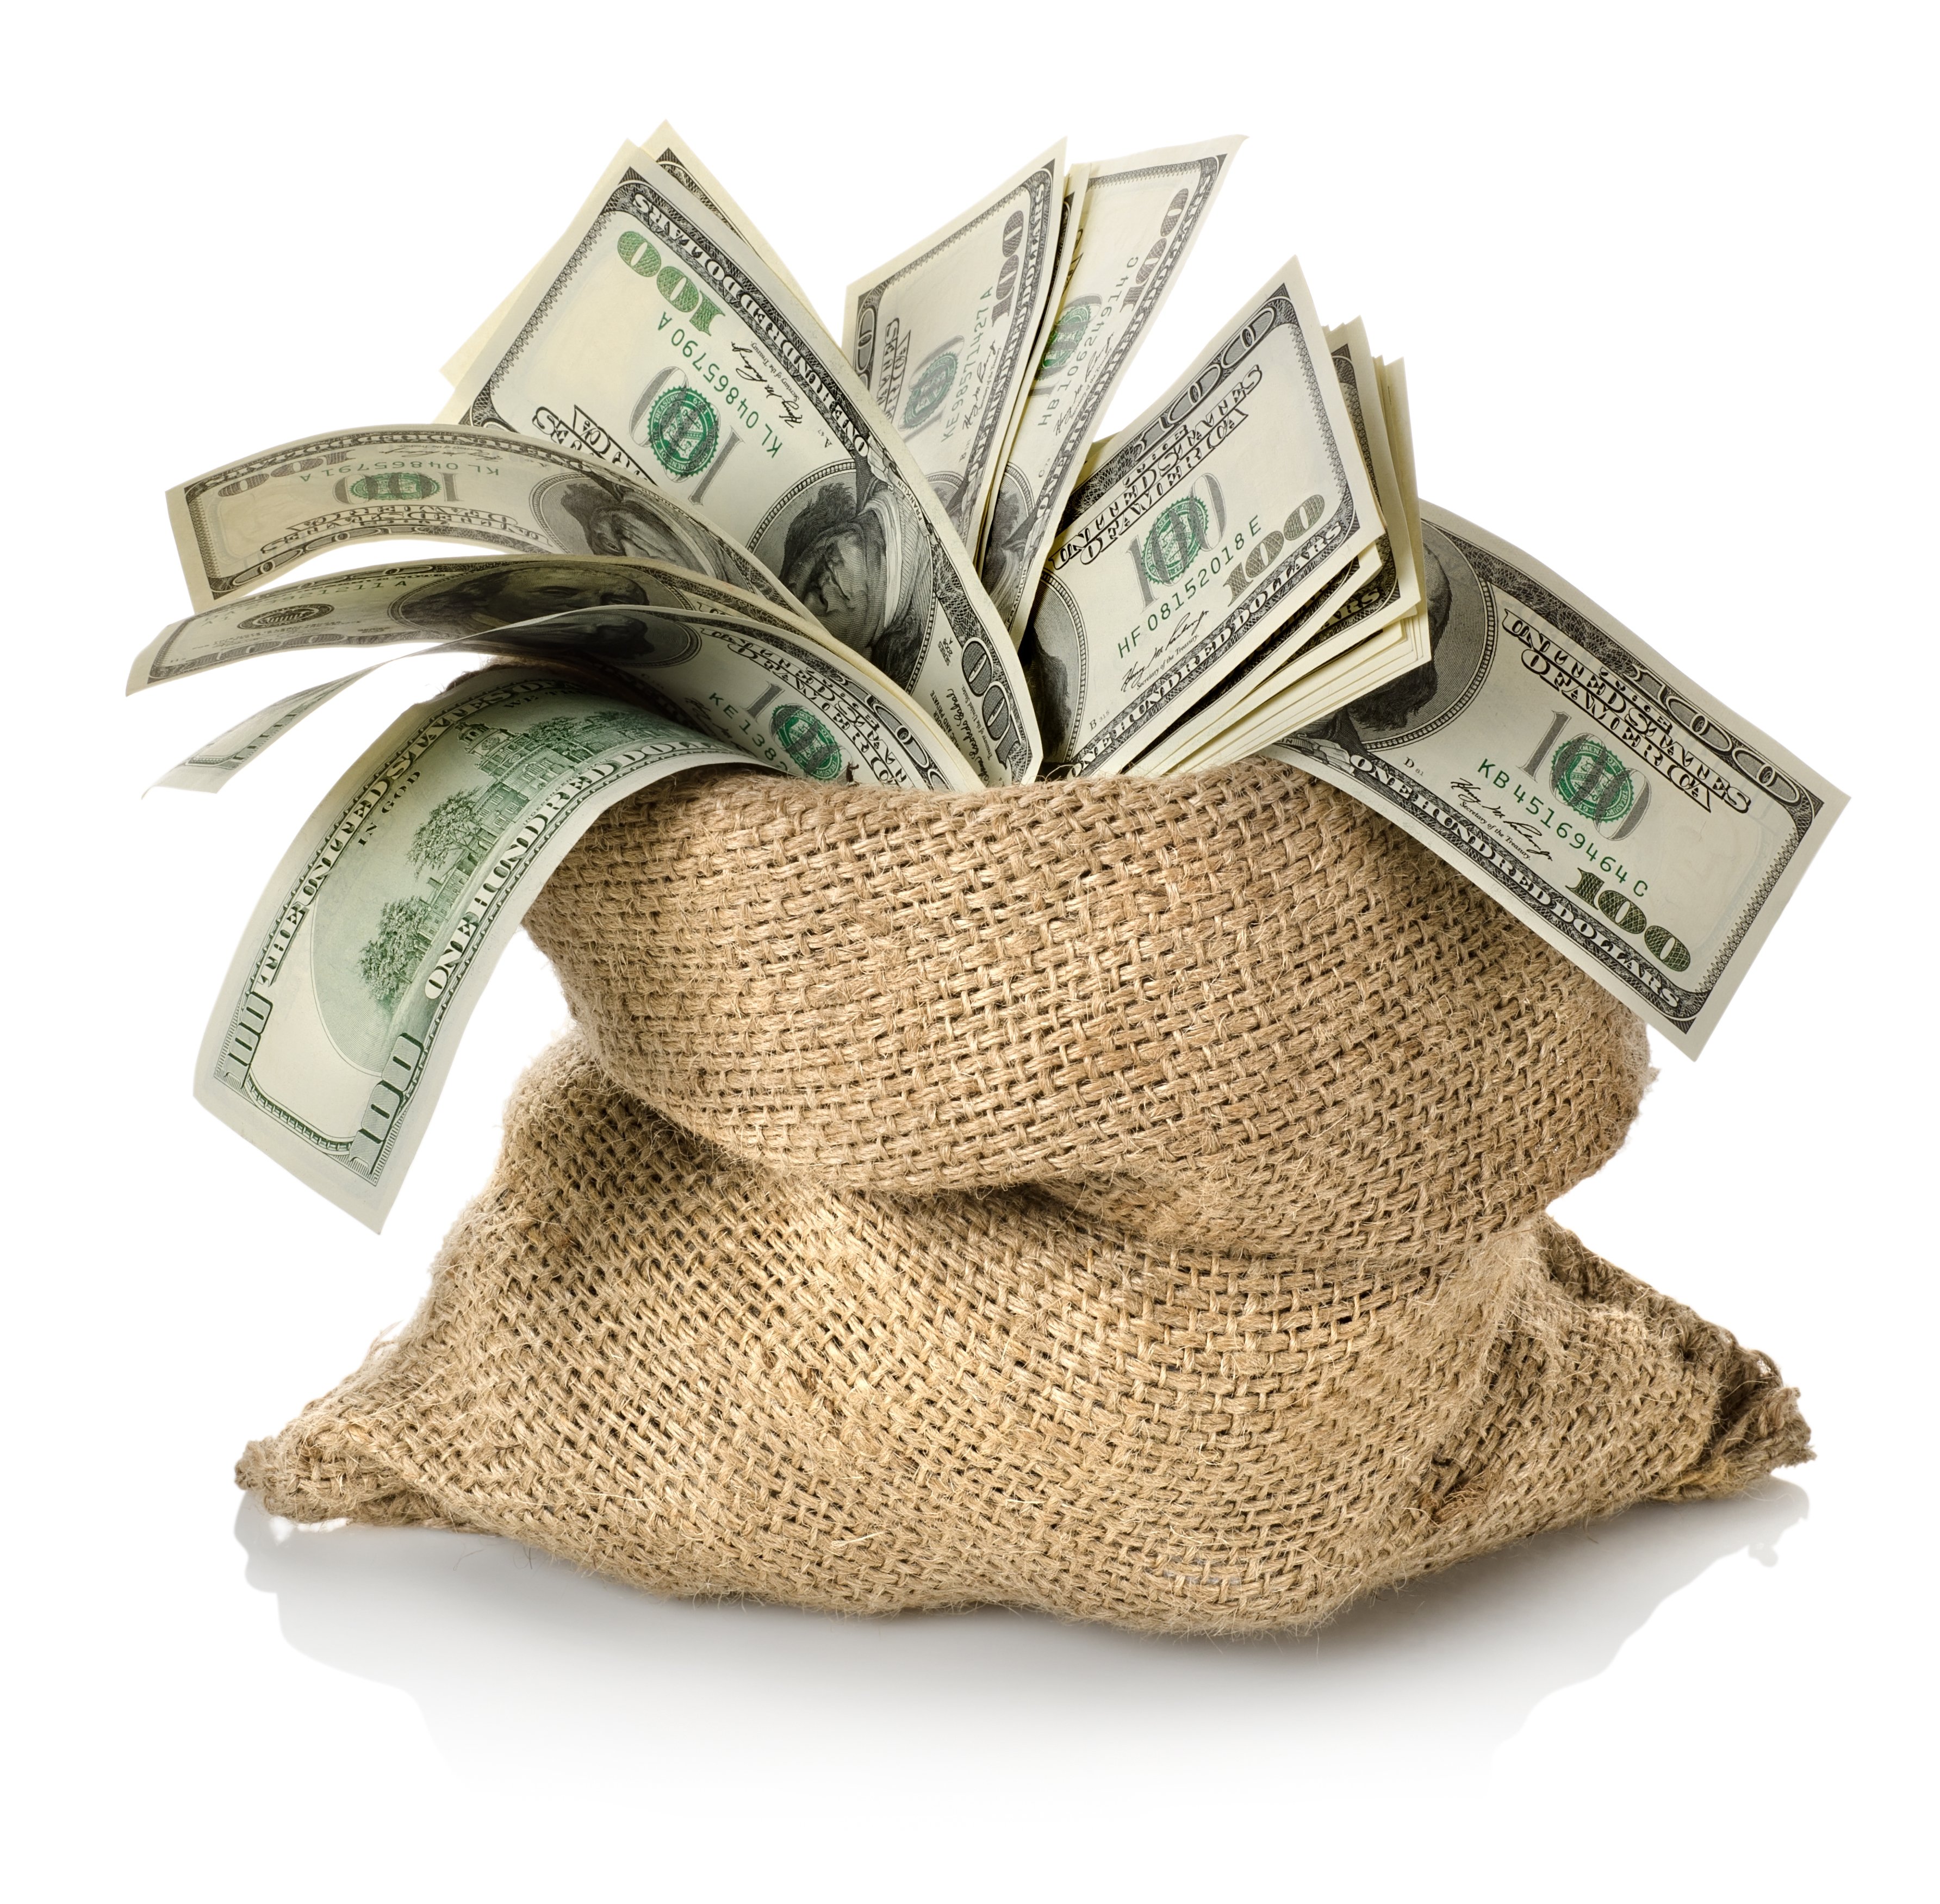 A bag full of $100 bills. | Photo: Shutterstock. 